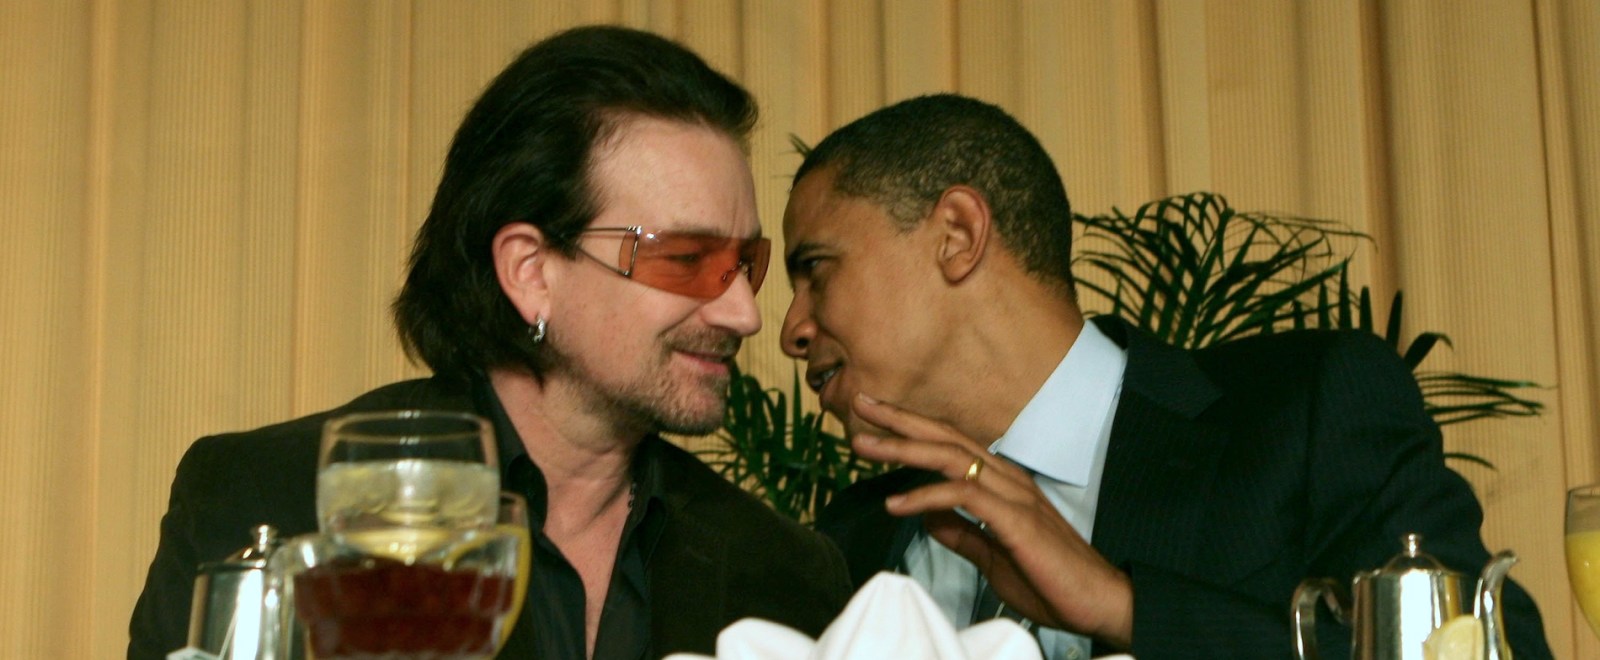 U2 Bono Barack Obama National Prayer Breakfast 2006